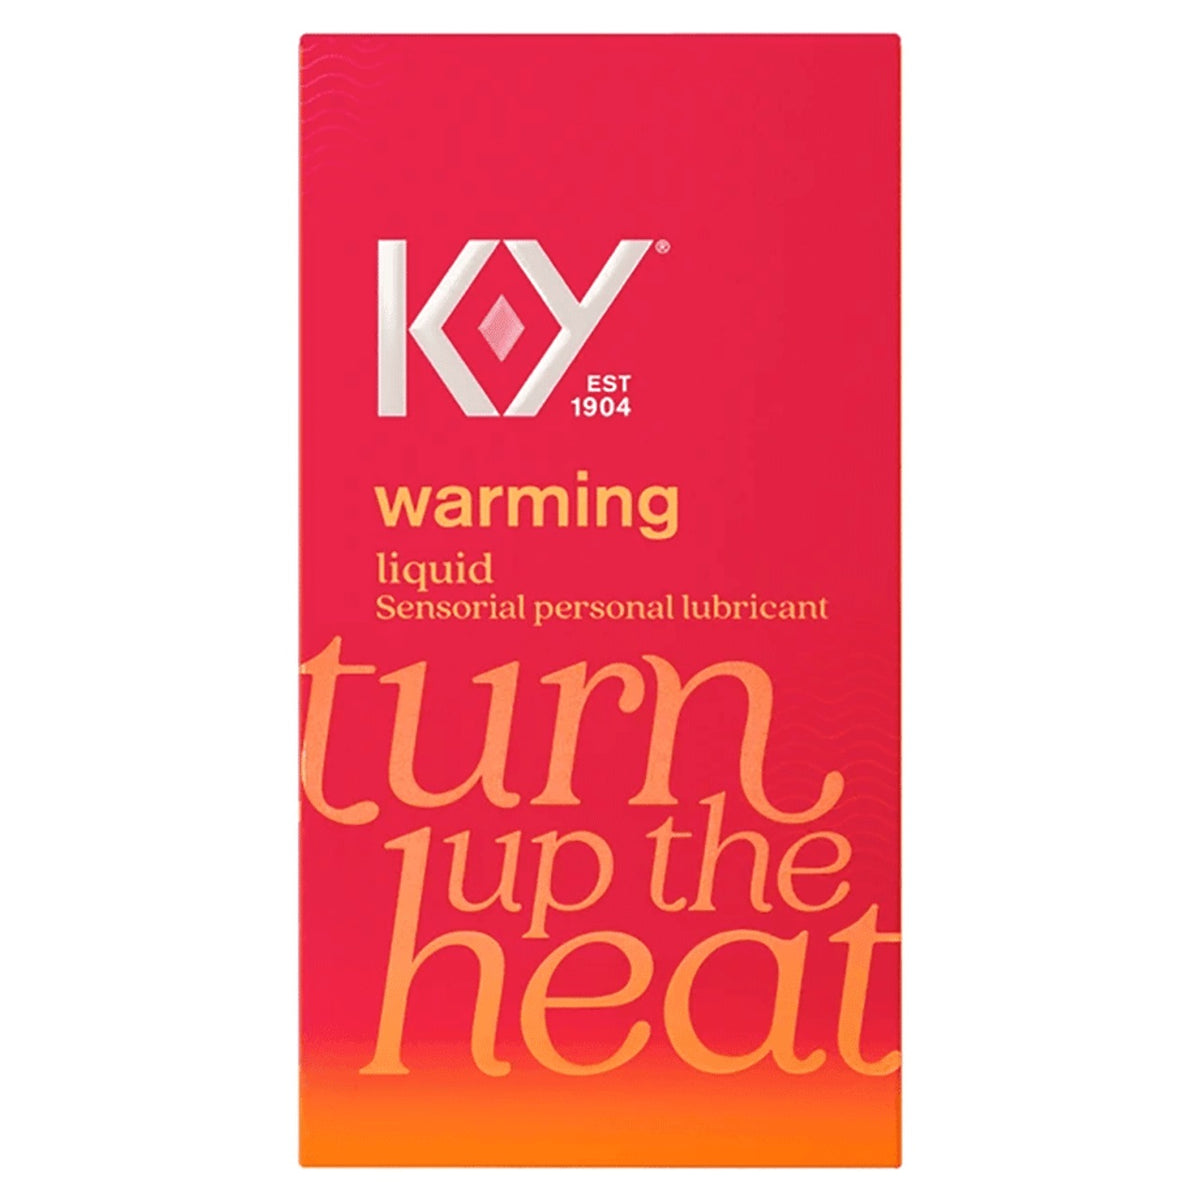 K-Y Warming Liquid 2.5 Oz Bottle PM8711